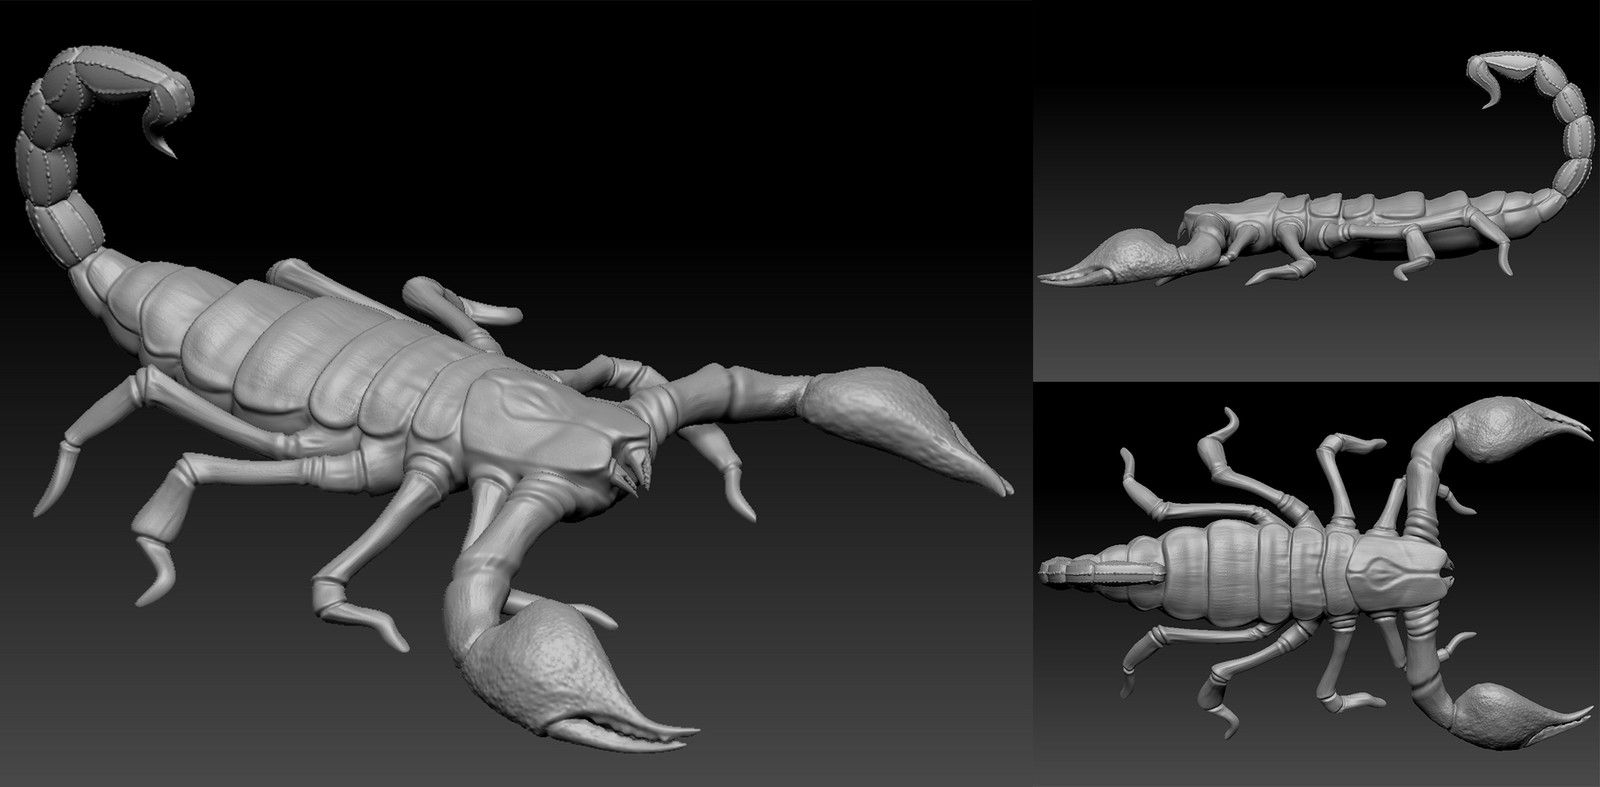 Scorpion 3D Model for VFX Project.